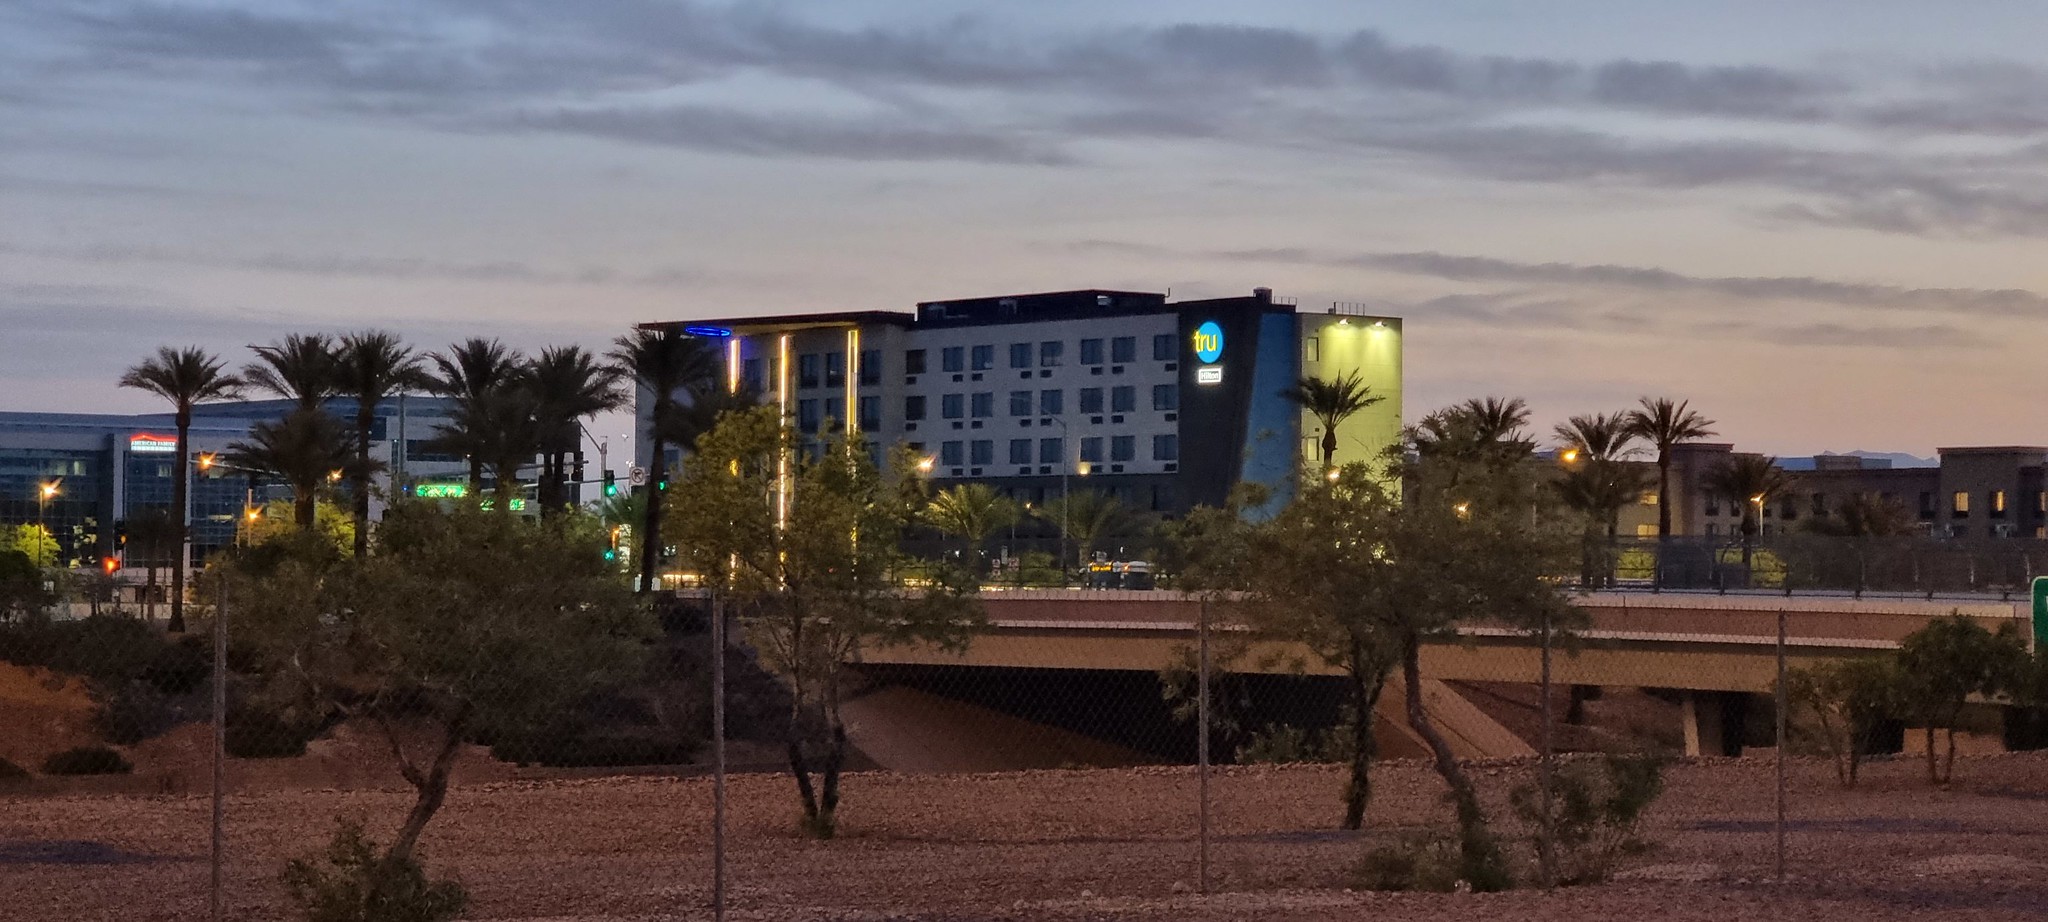 The Hilton Tru hotel in Las Vegas